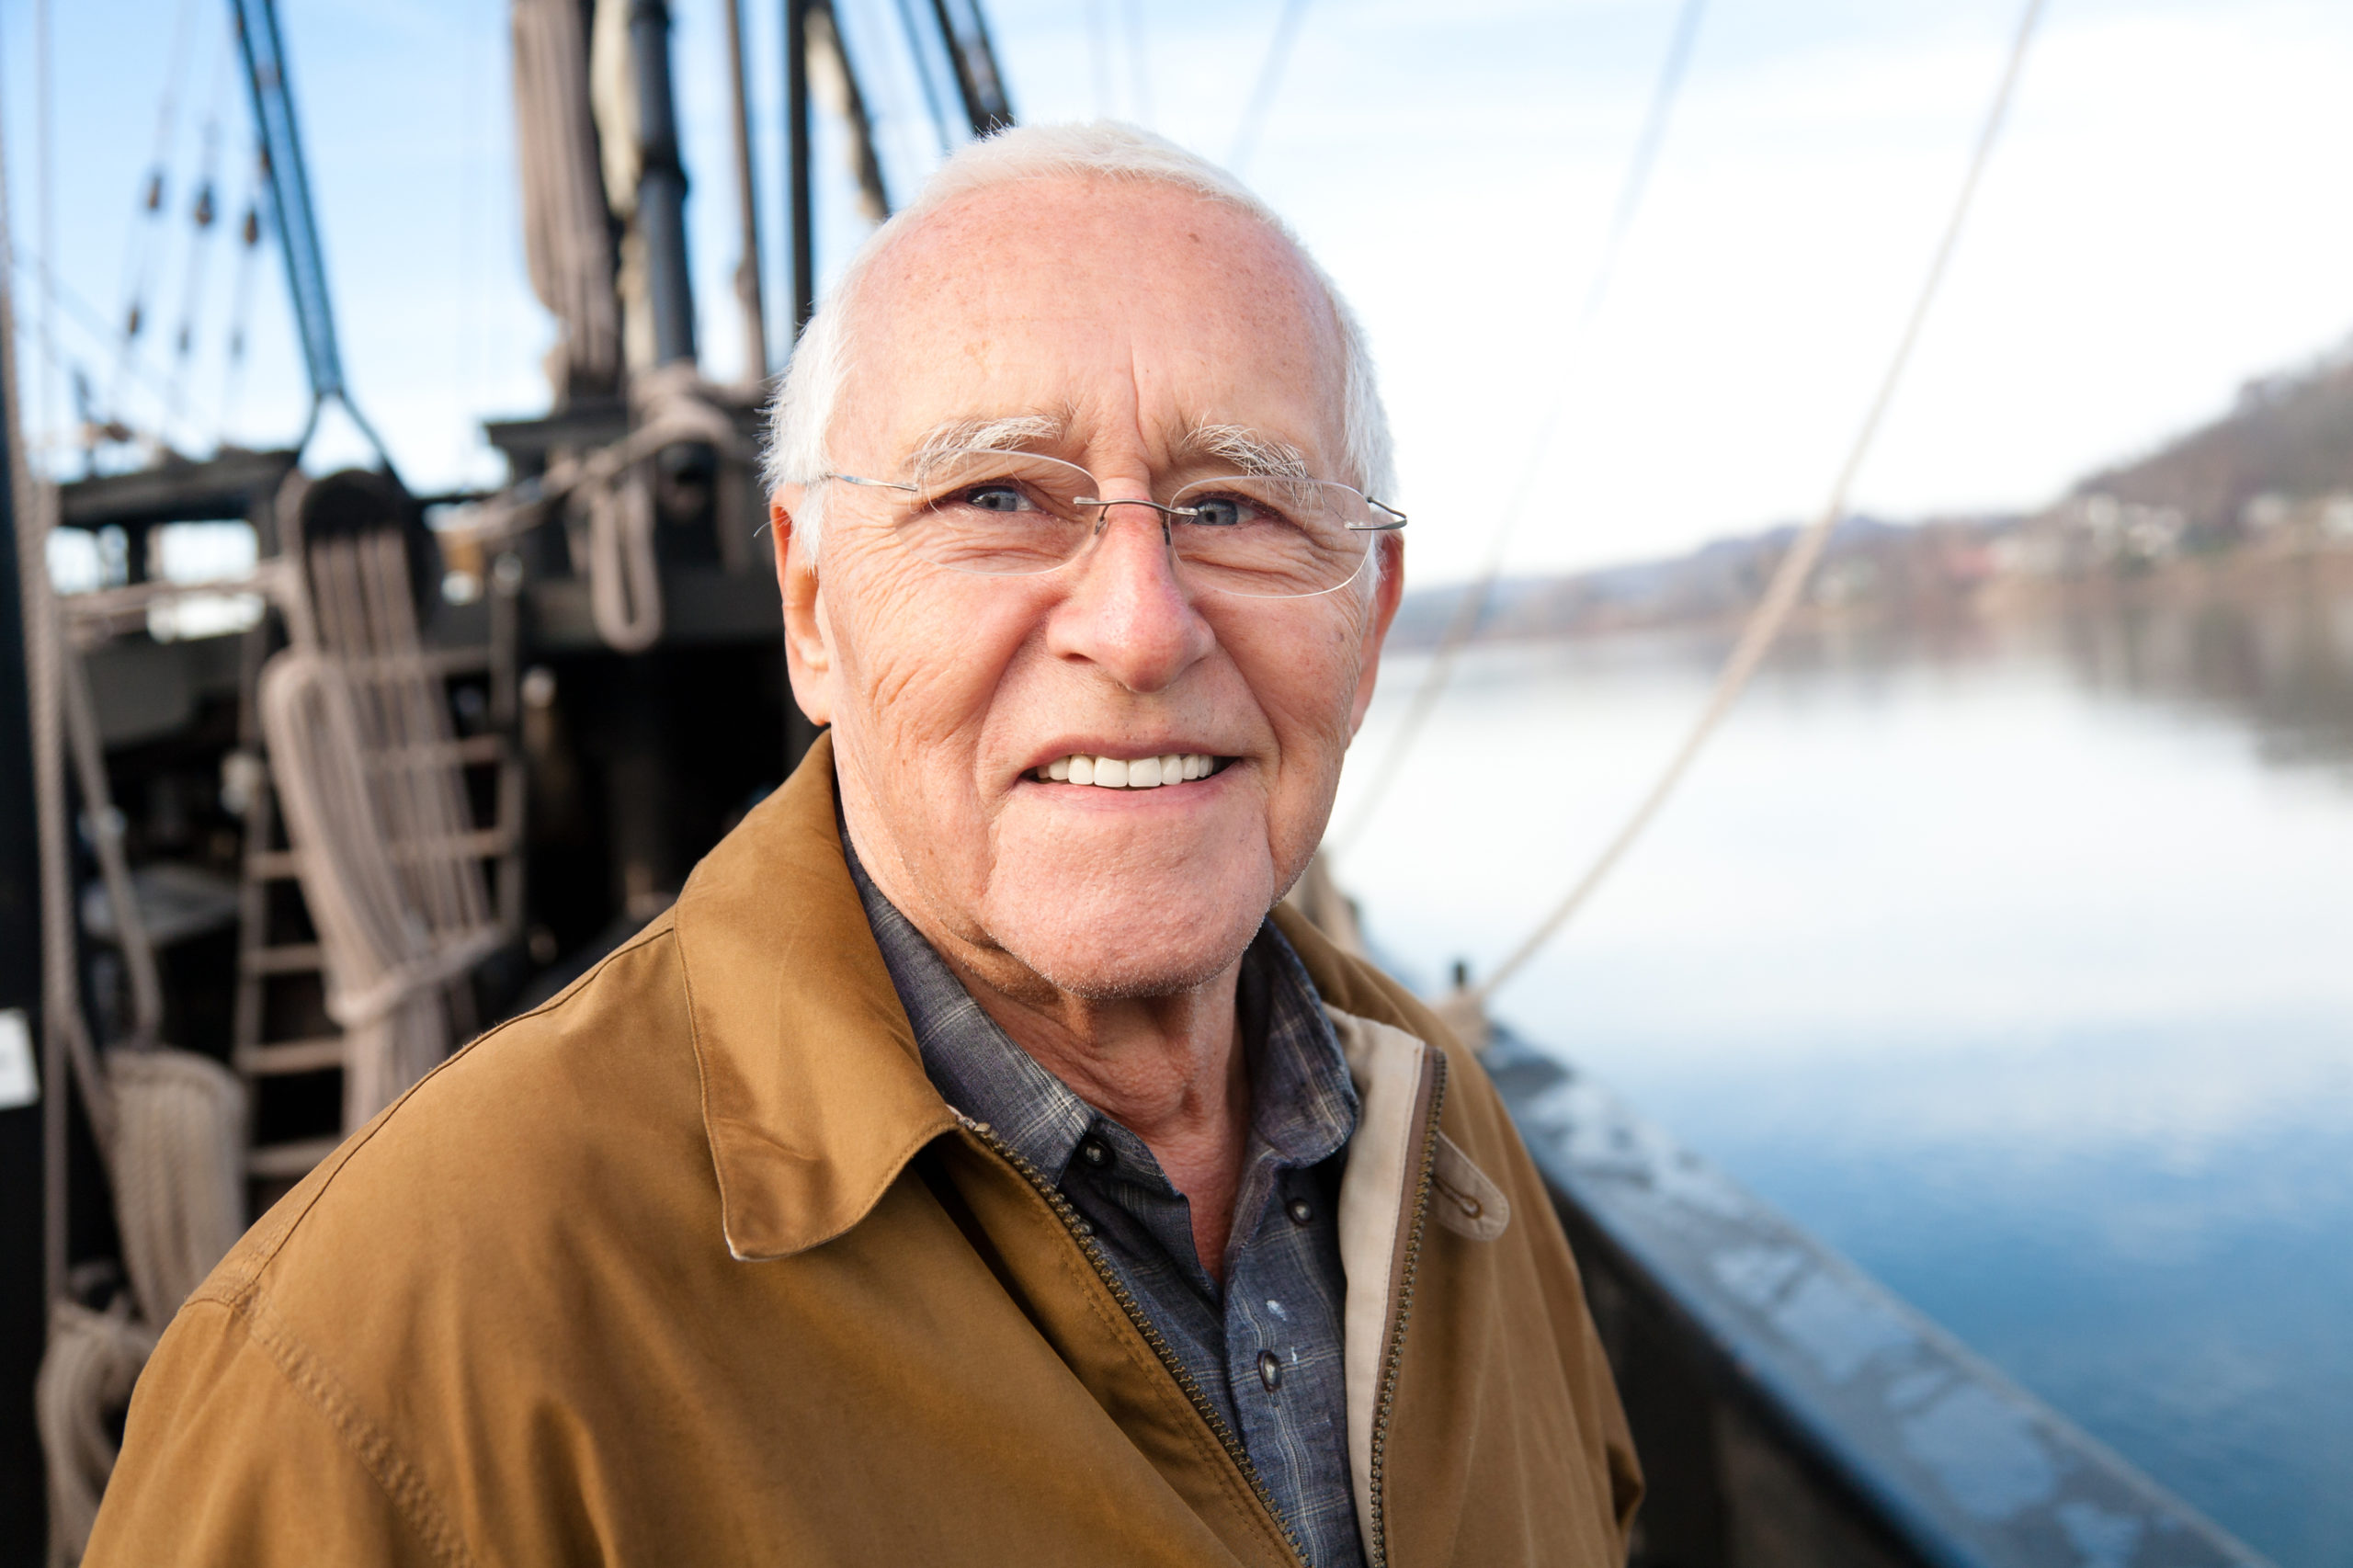 senior man on a ship smiling